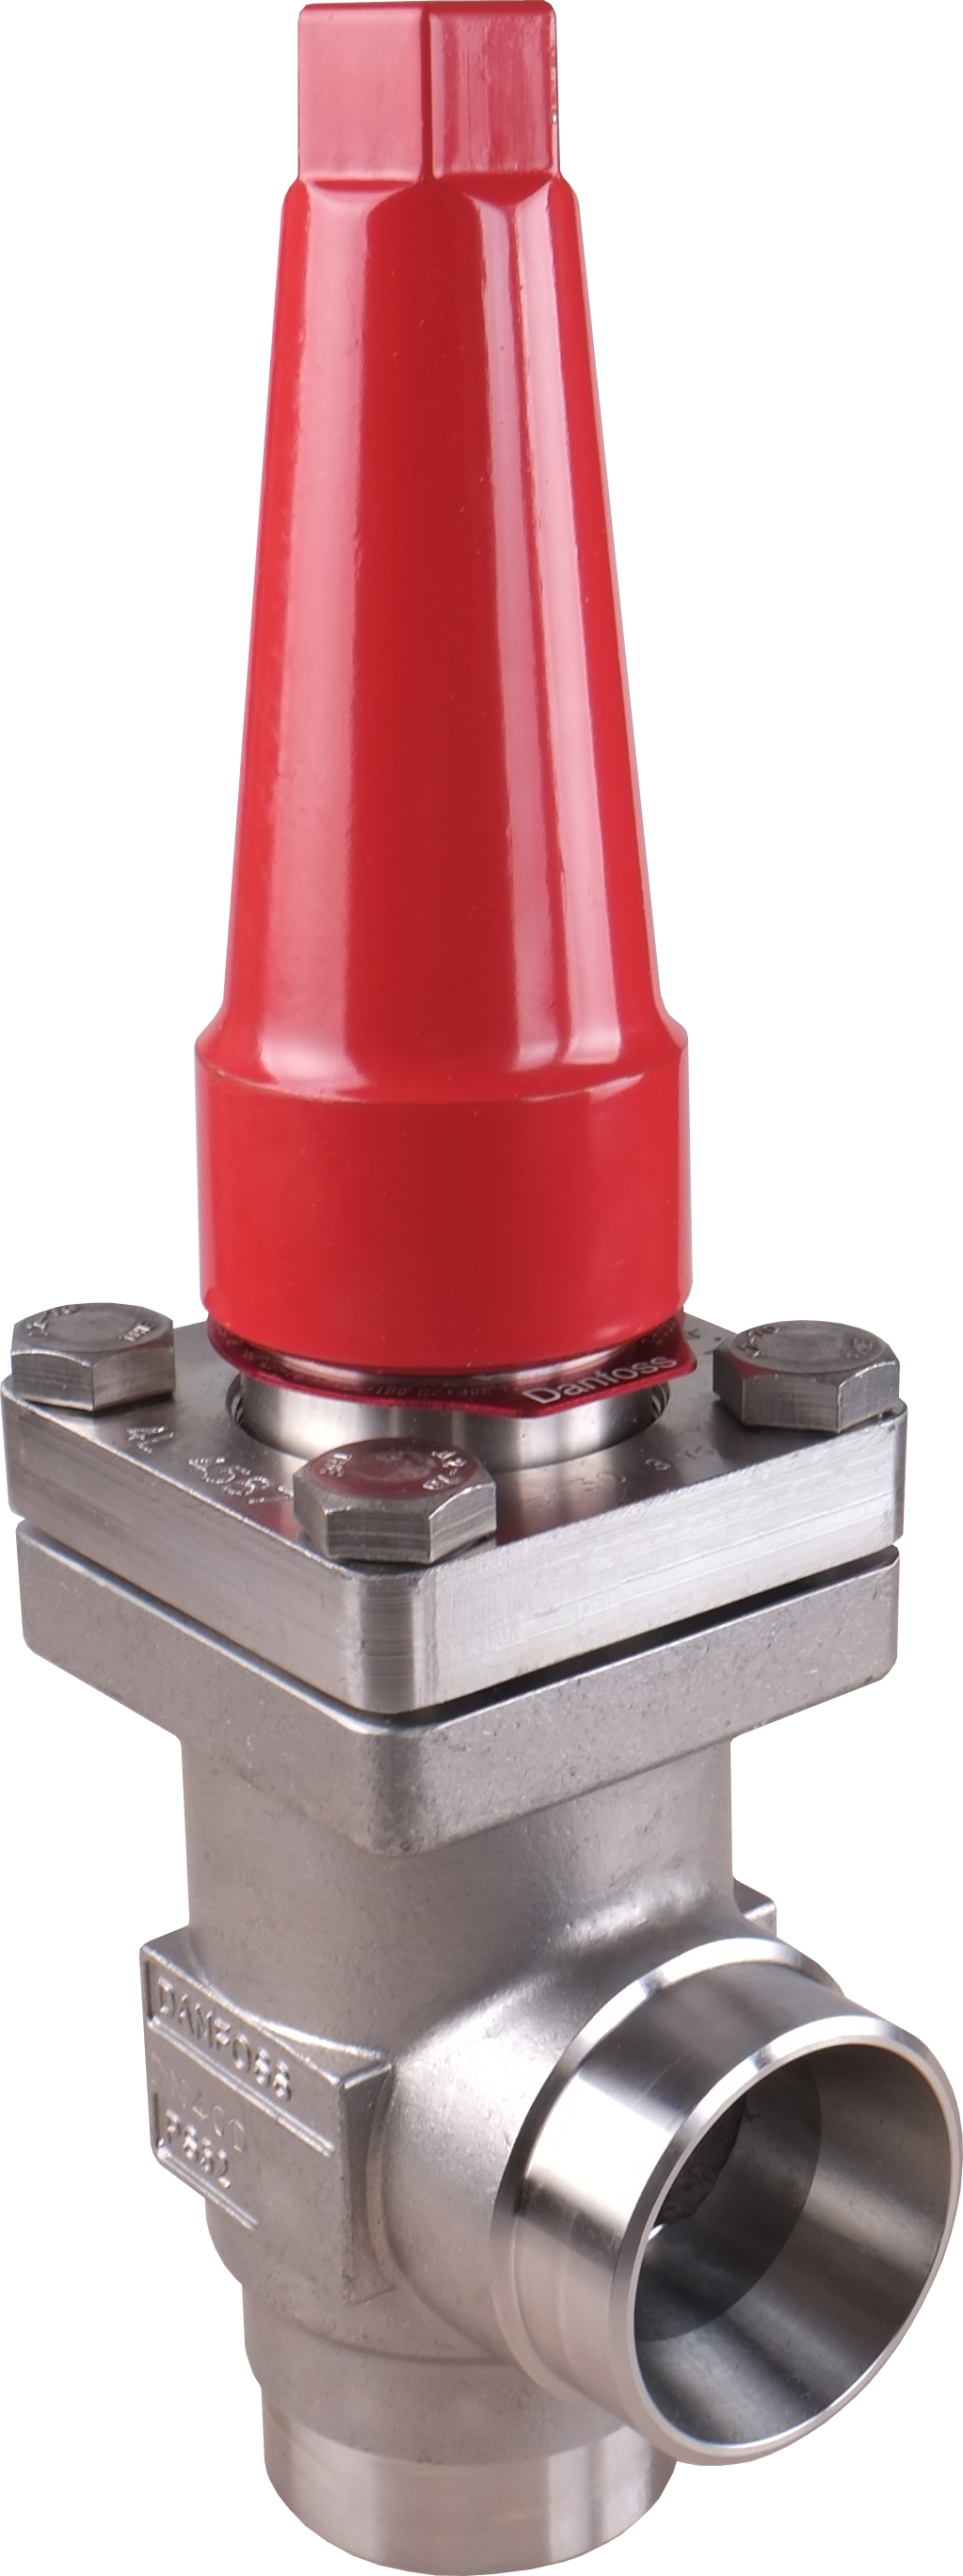 Shut-off valve, SVA-S SS 65 A10, Stainless steel, Max. Working Pressure [psig]: 754